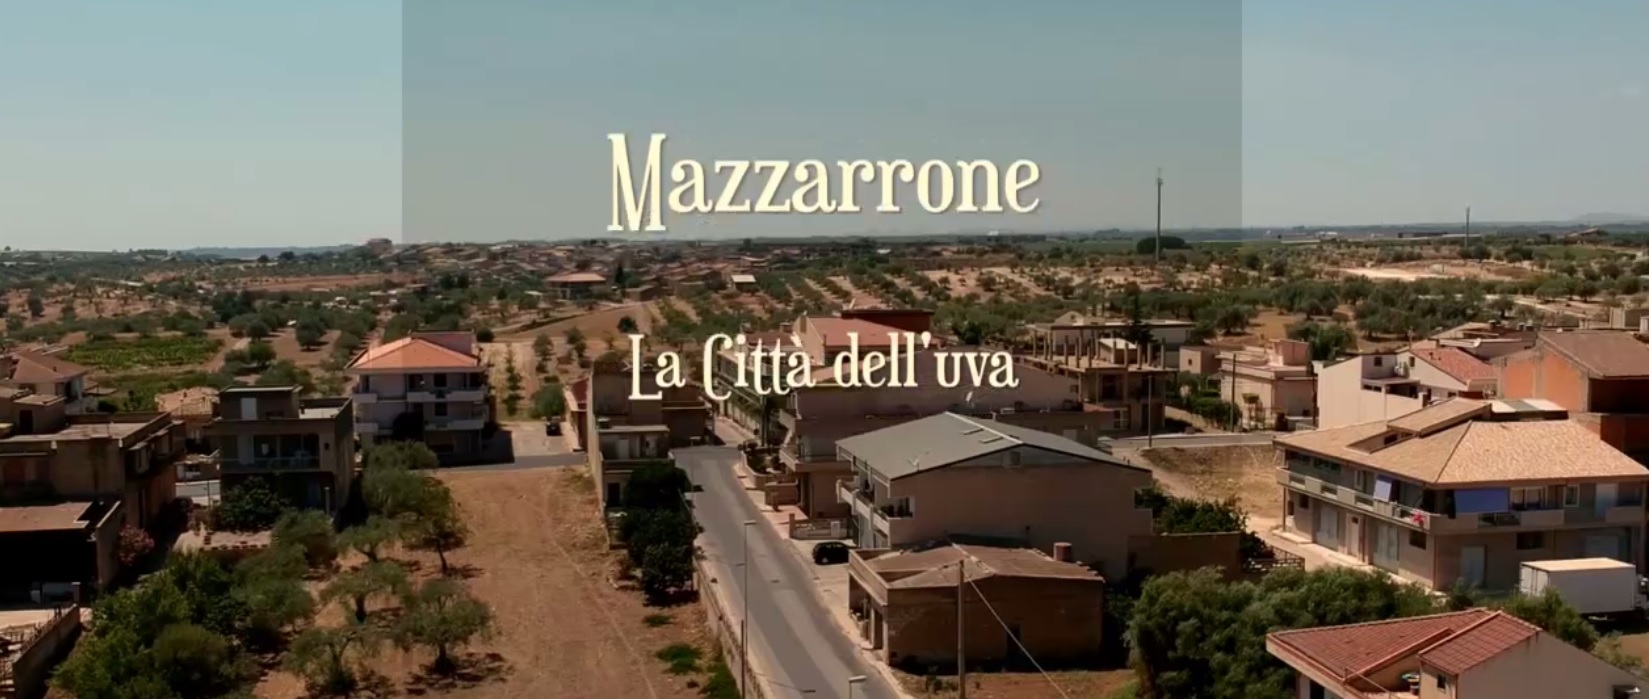 mazzarrone - documentario - uva